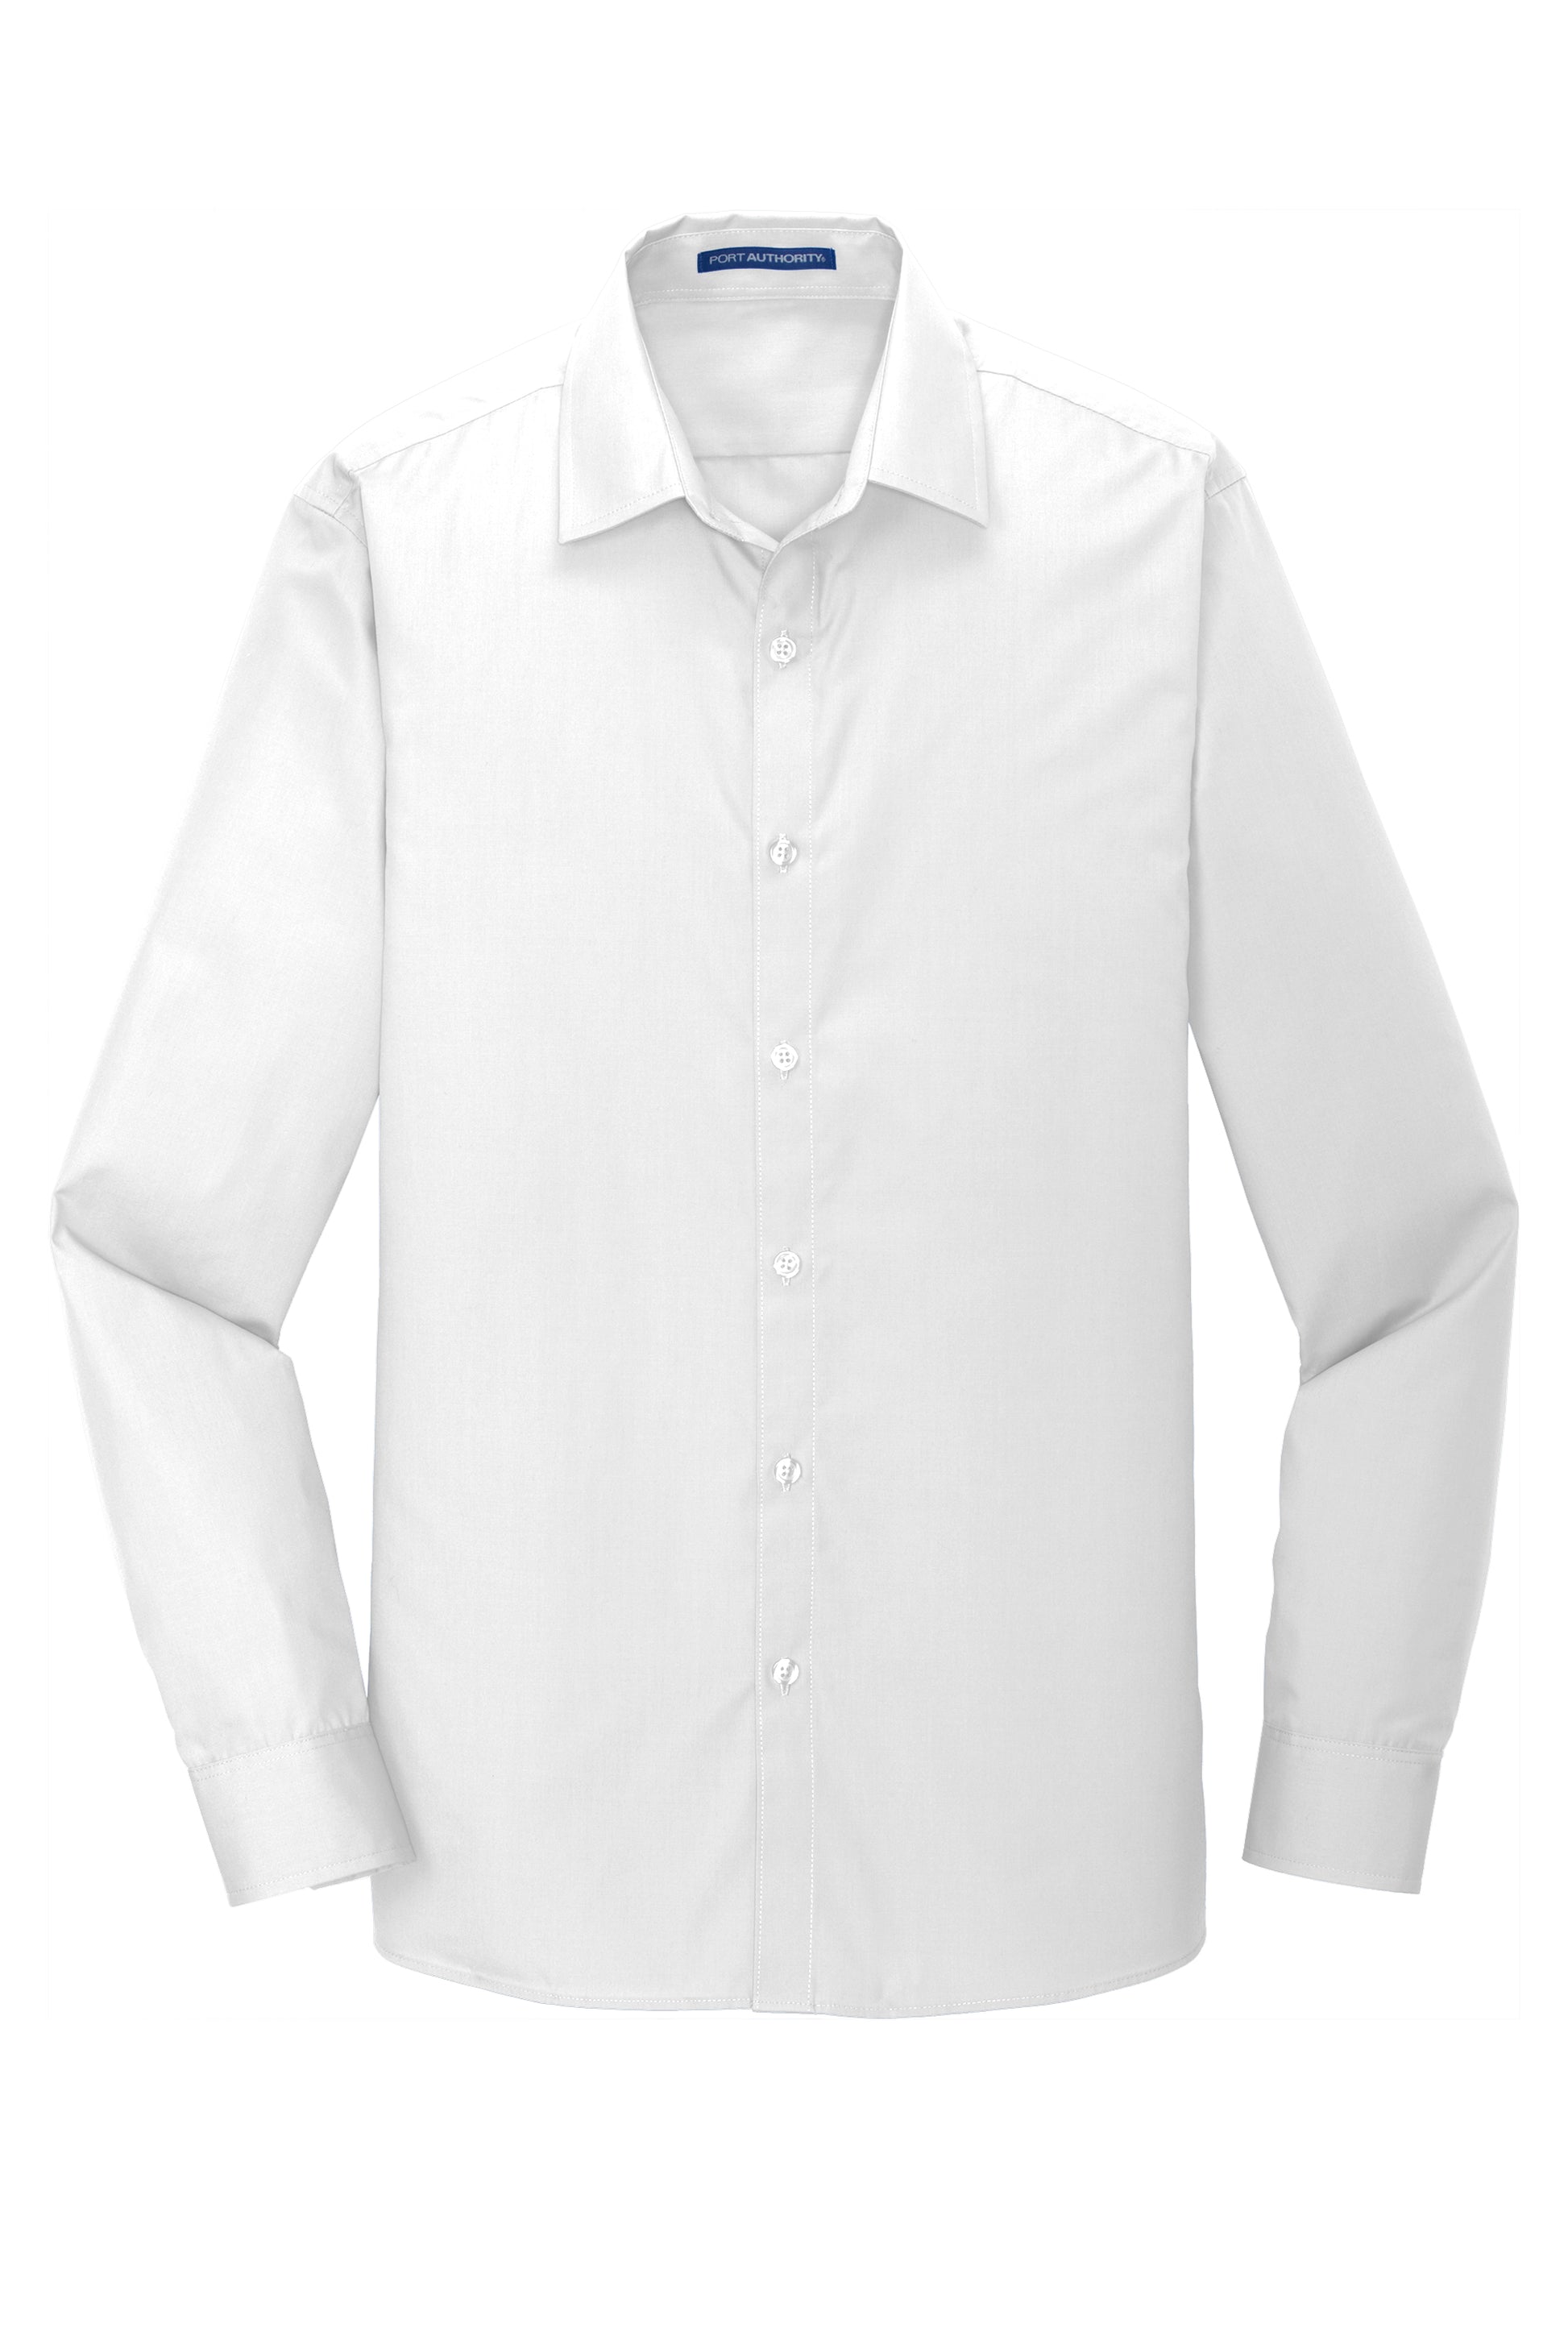 port authority slim fit long sleeve carefree poplin shirt white